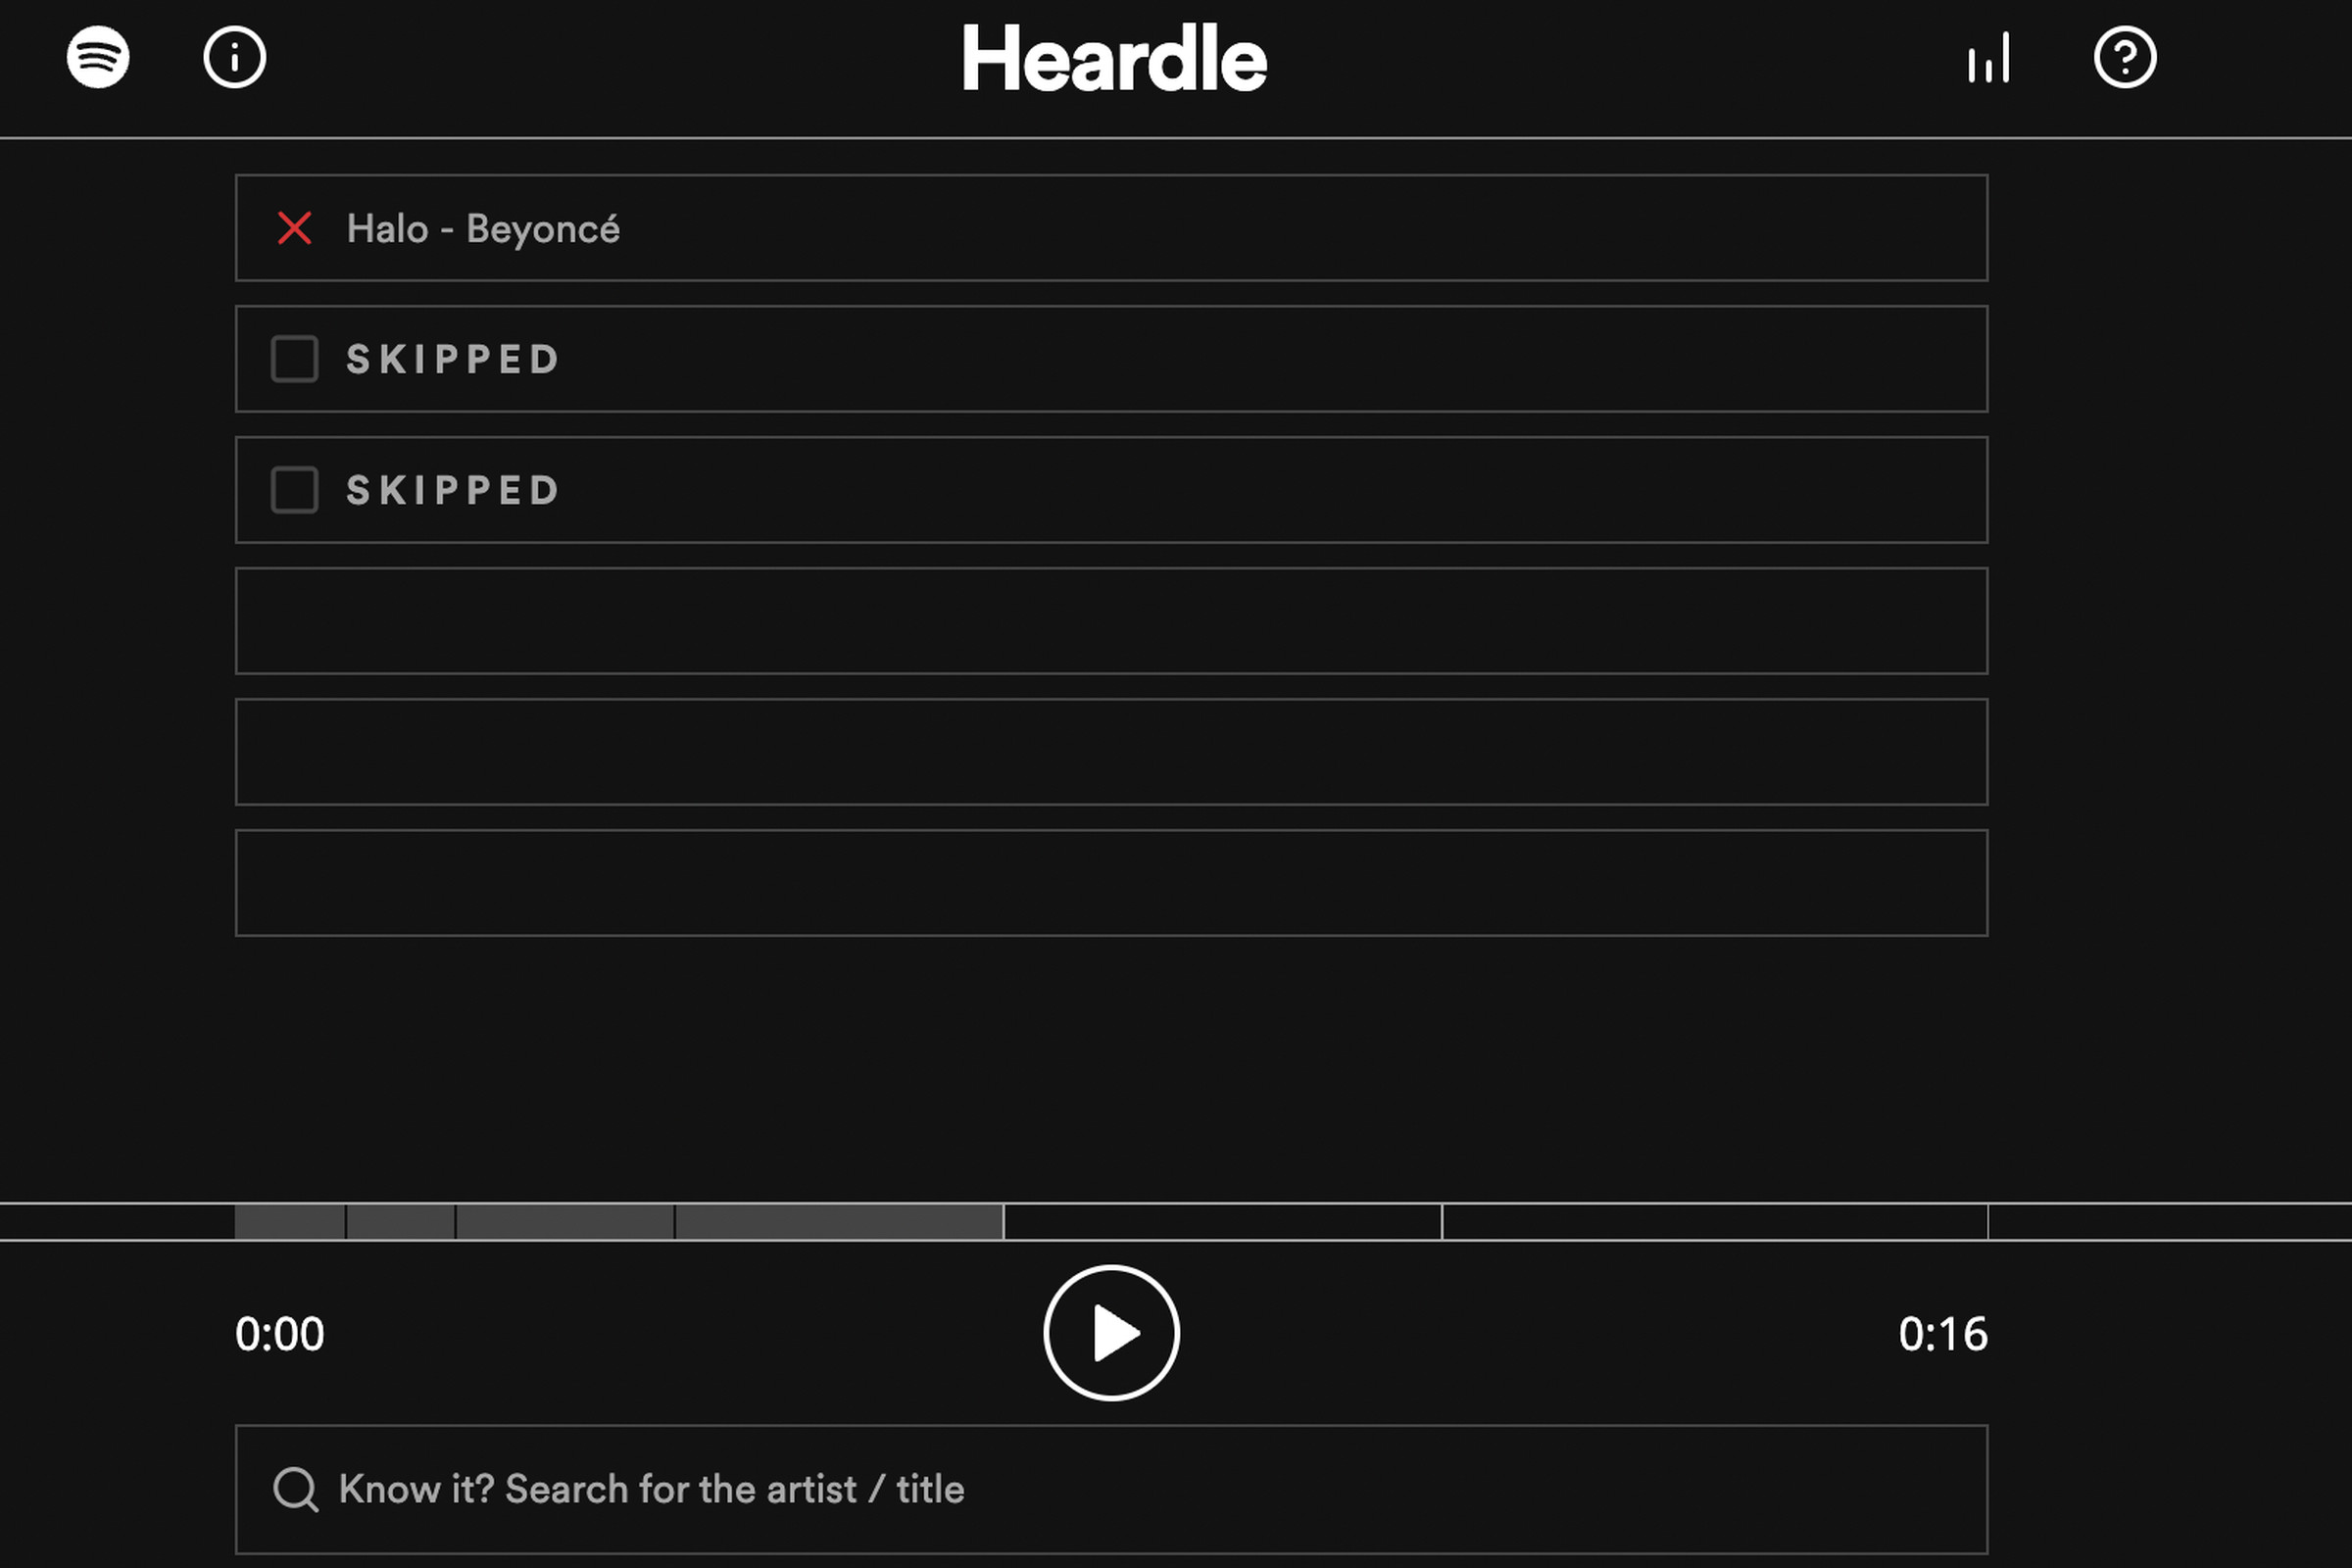 A screenshot showing Heardle’s interface